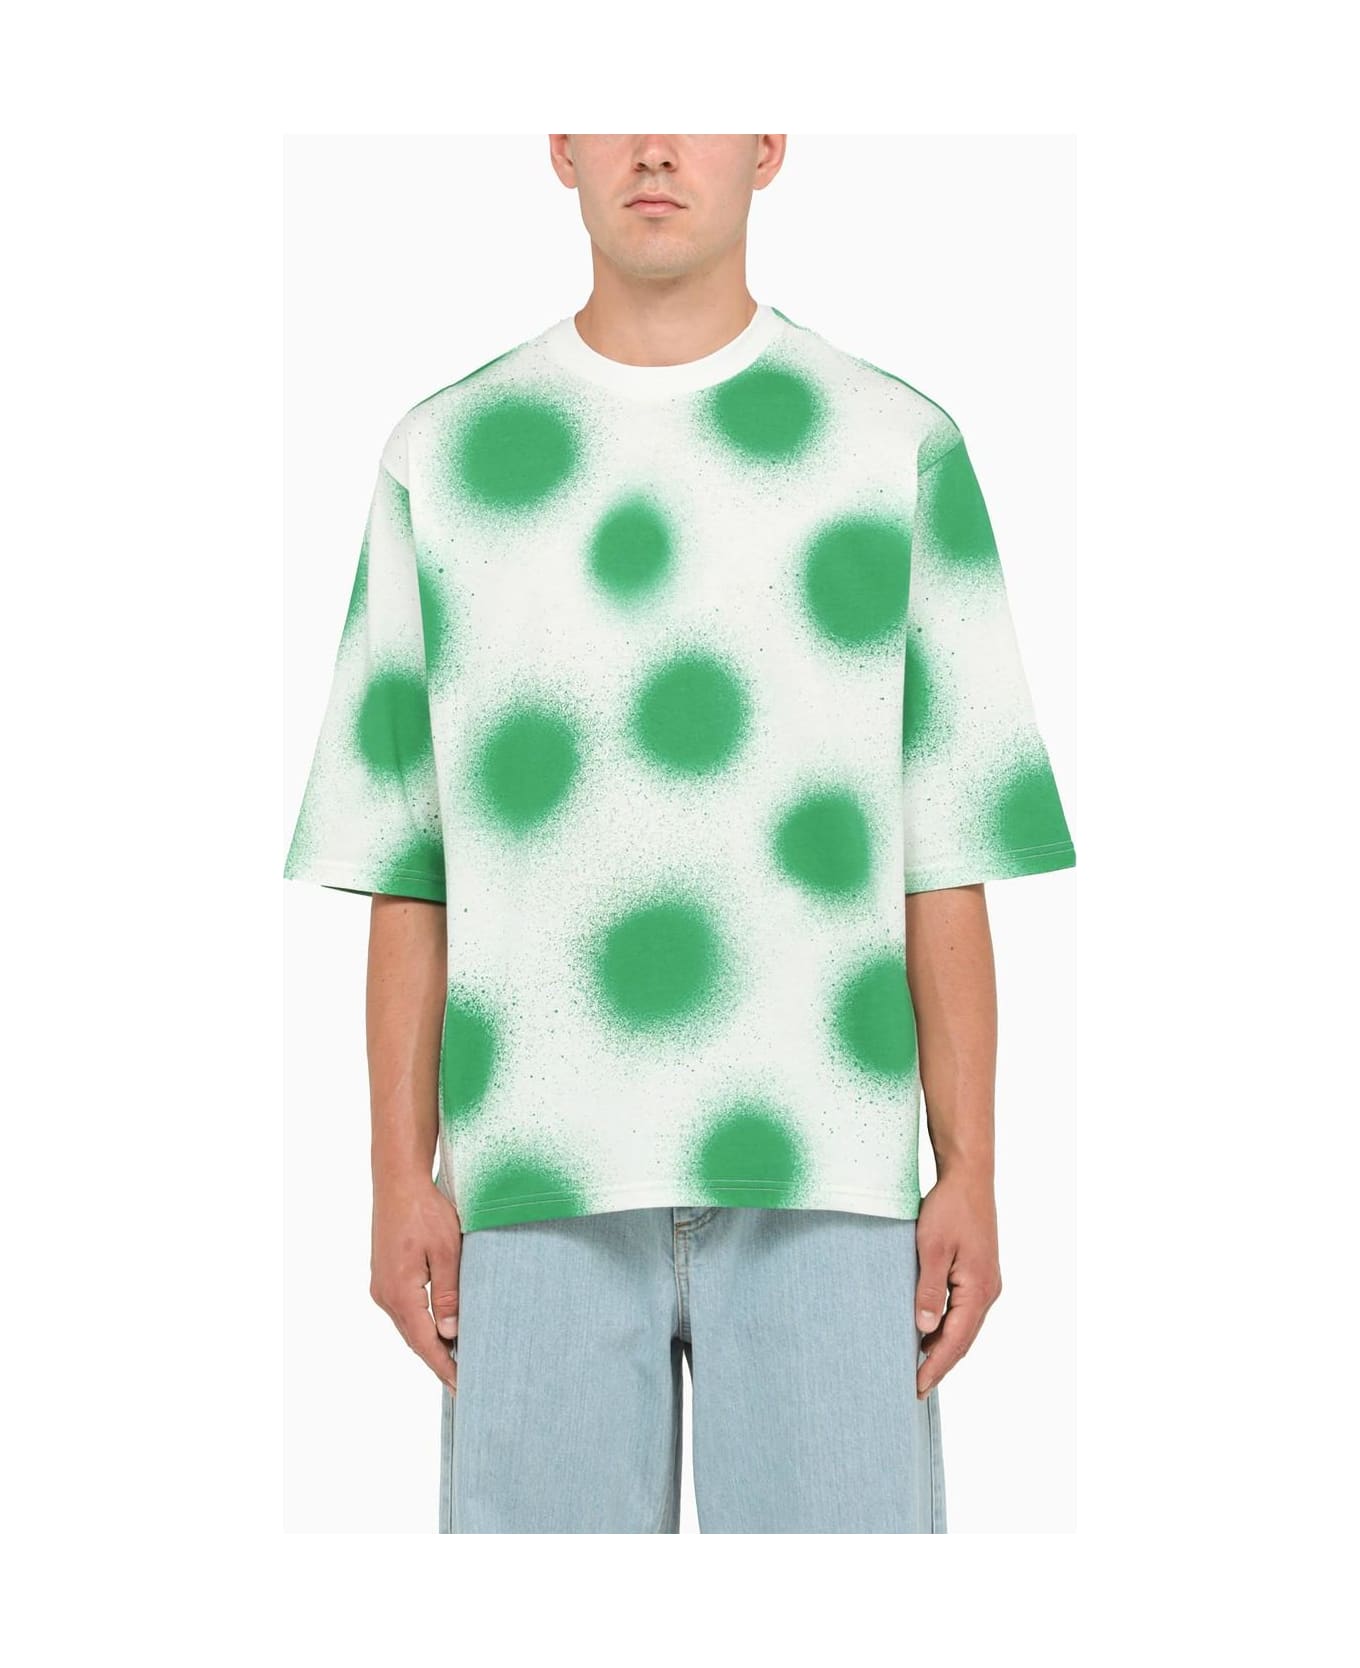 Moncler Genius White And Green Polka Dot T-shirt - WHITE